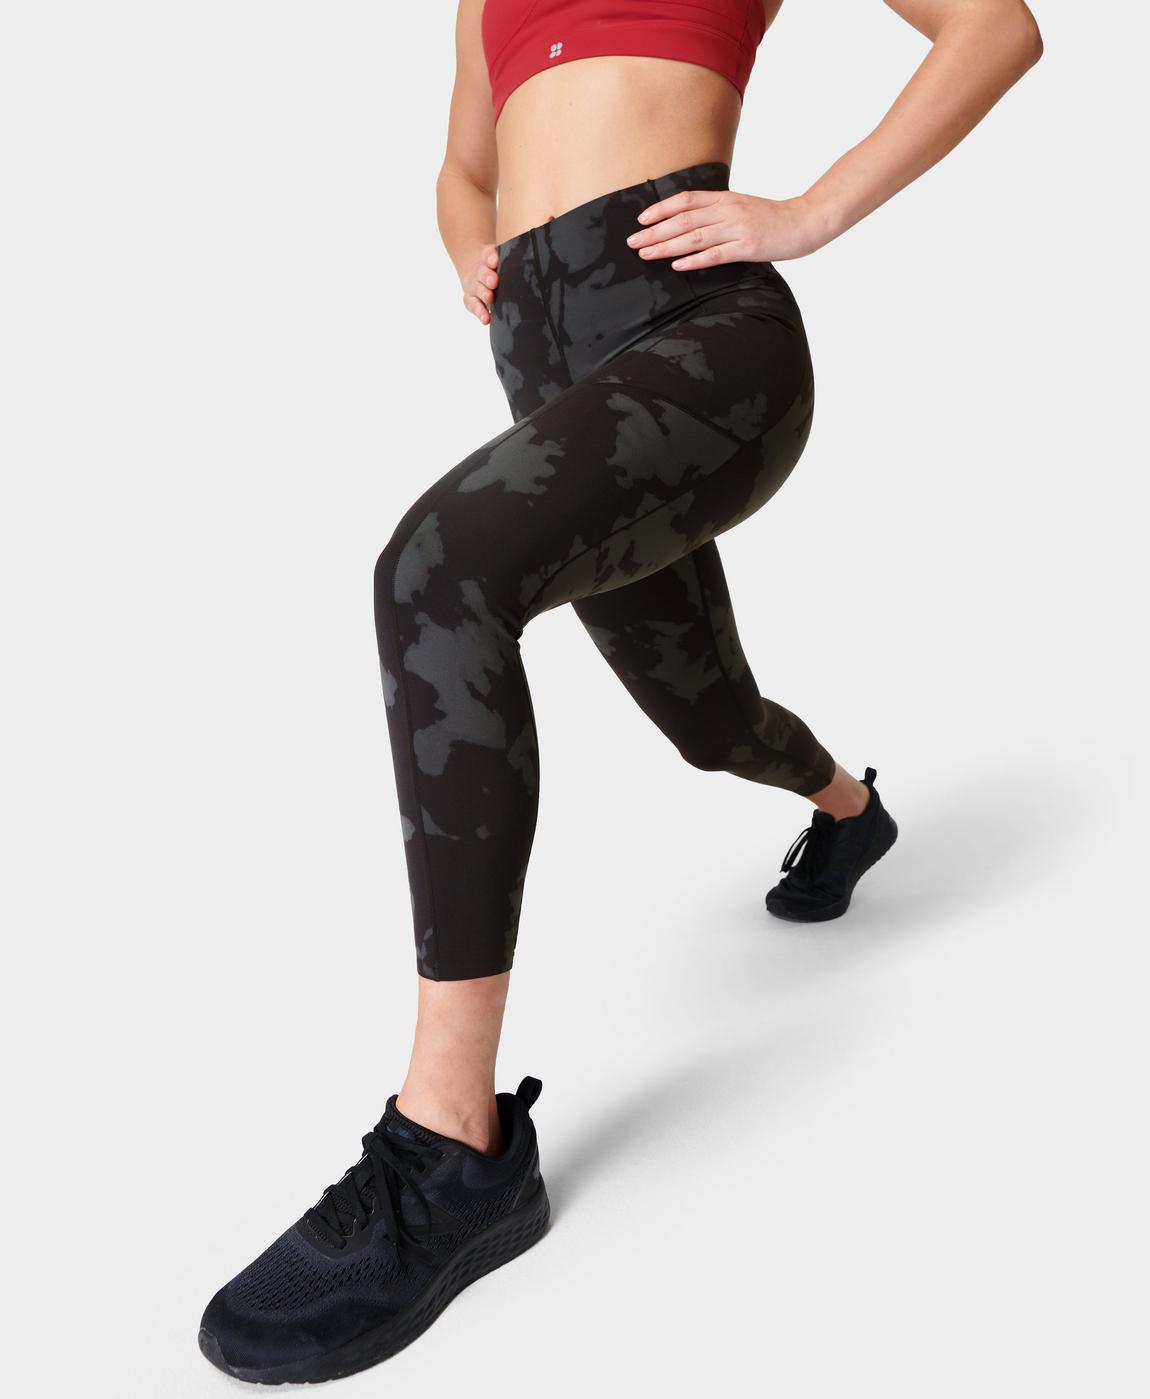 Power UltraSculpt High-Waisted Workout Leggings - Black Fade Print, Women's Leggings